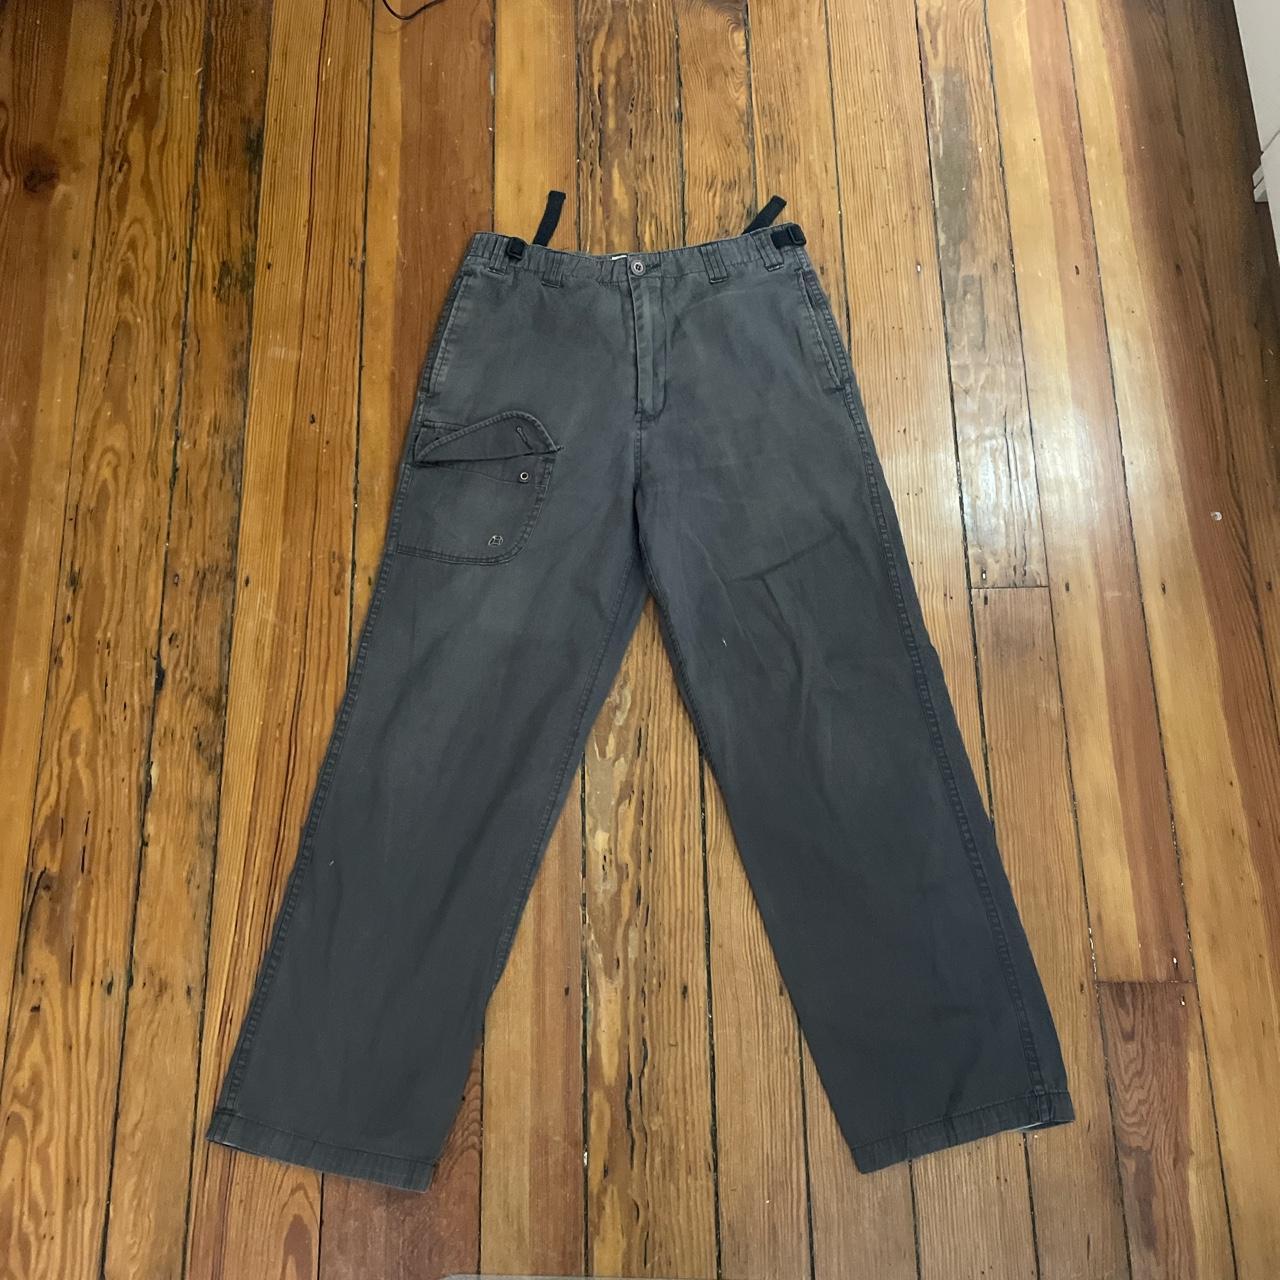 Vintage Freshjive cargo pants Size M - Depop